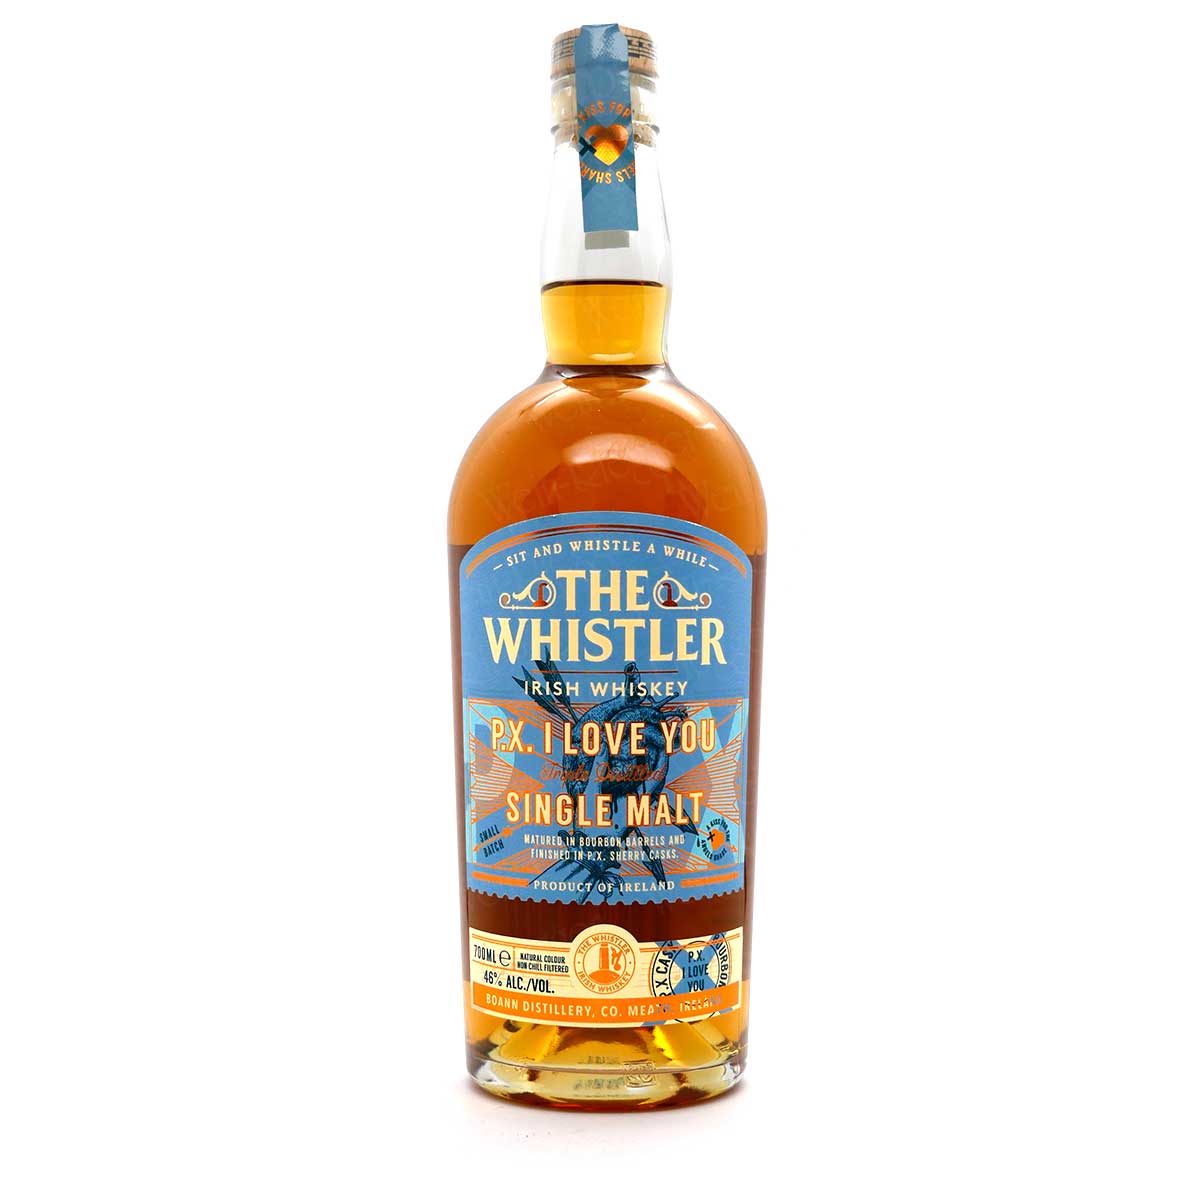 The Whistler P.X. I Love You | Irish Whiskey